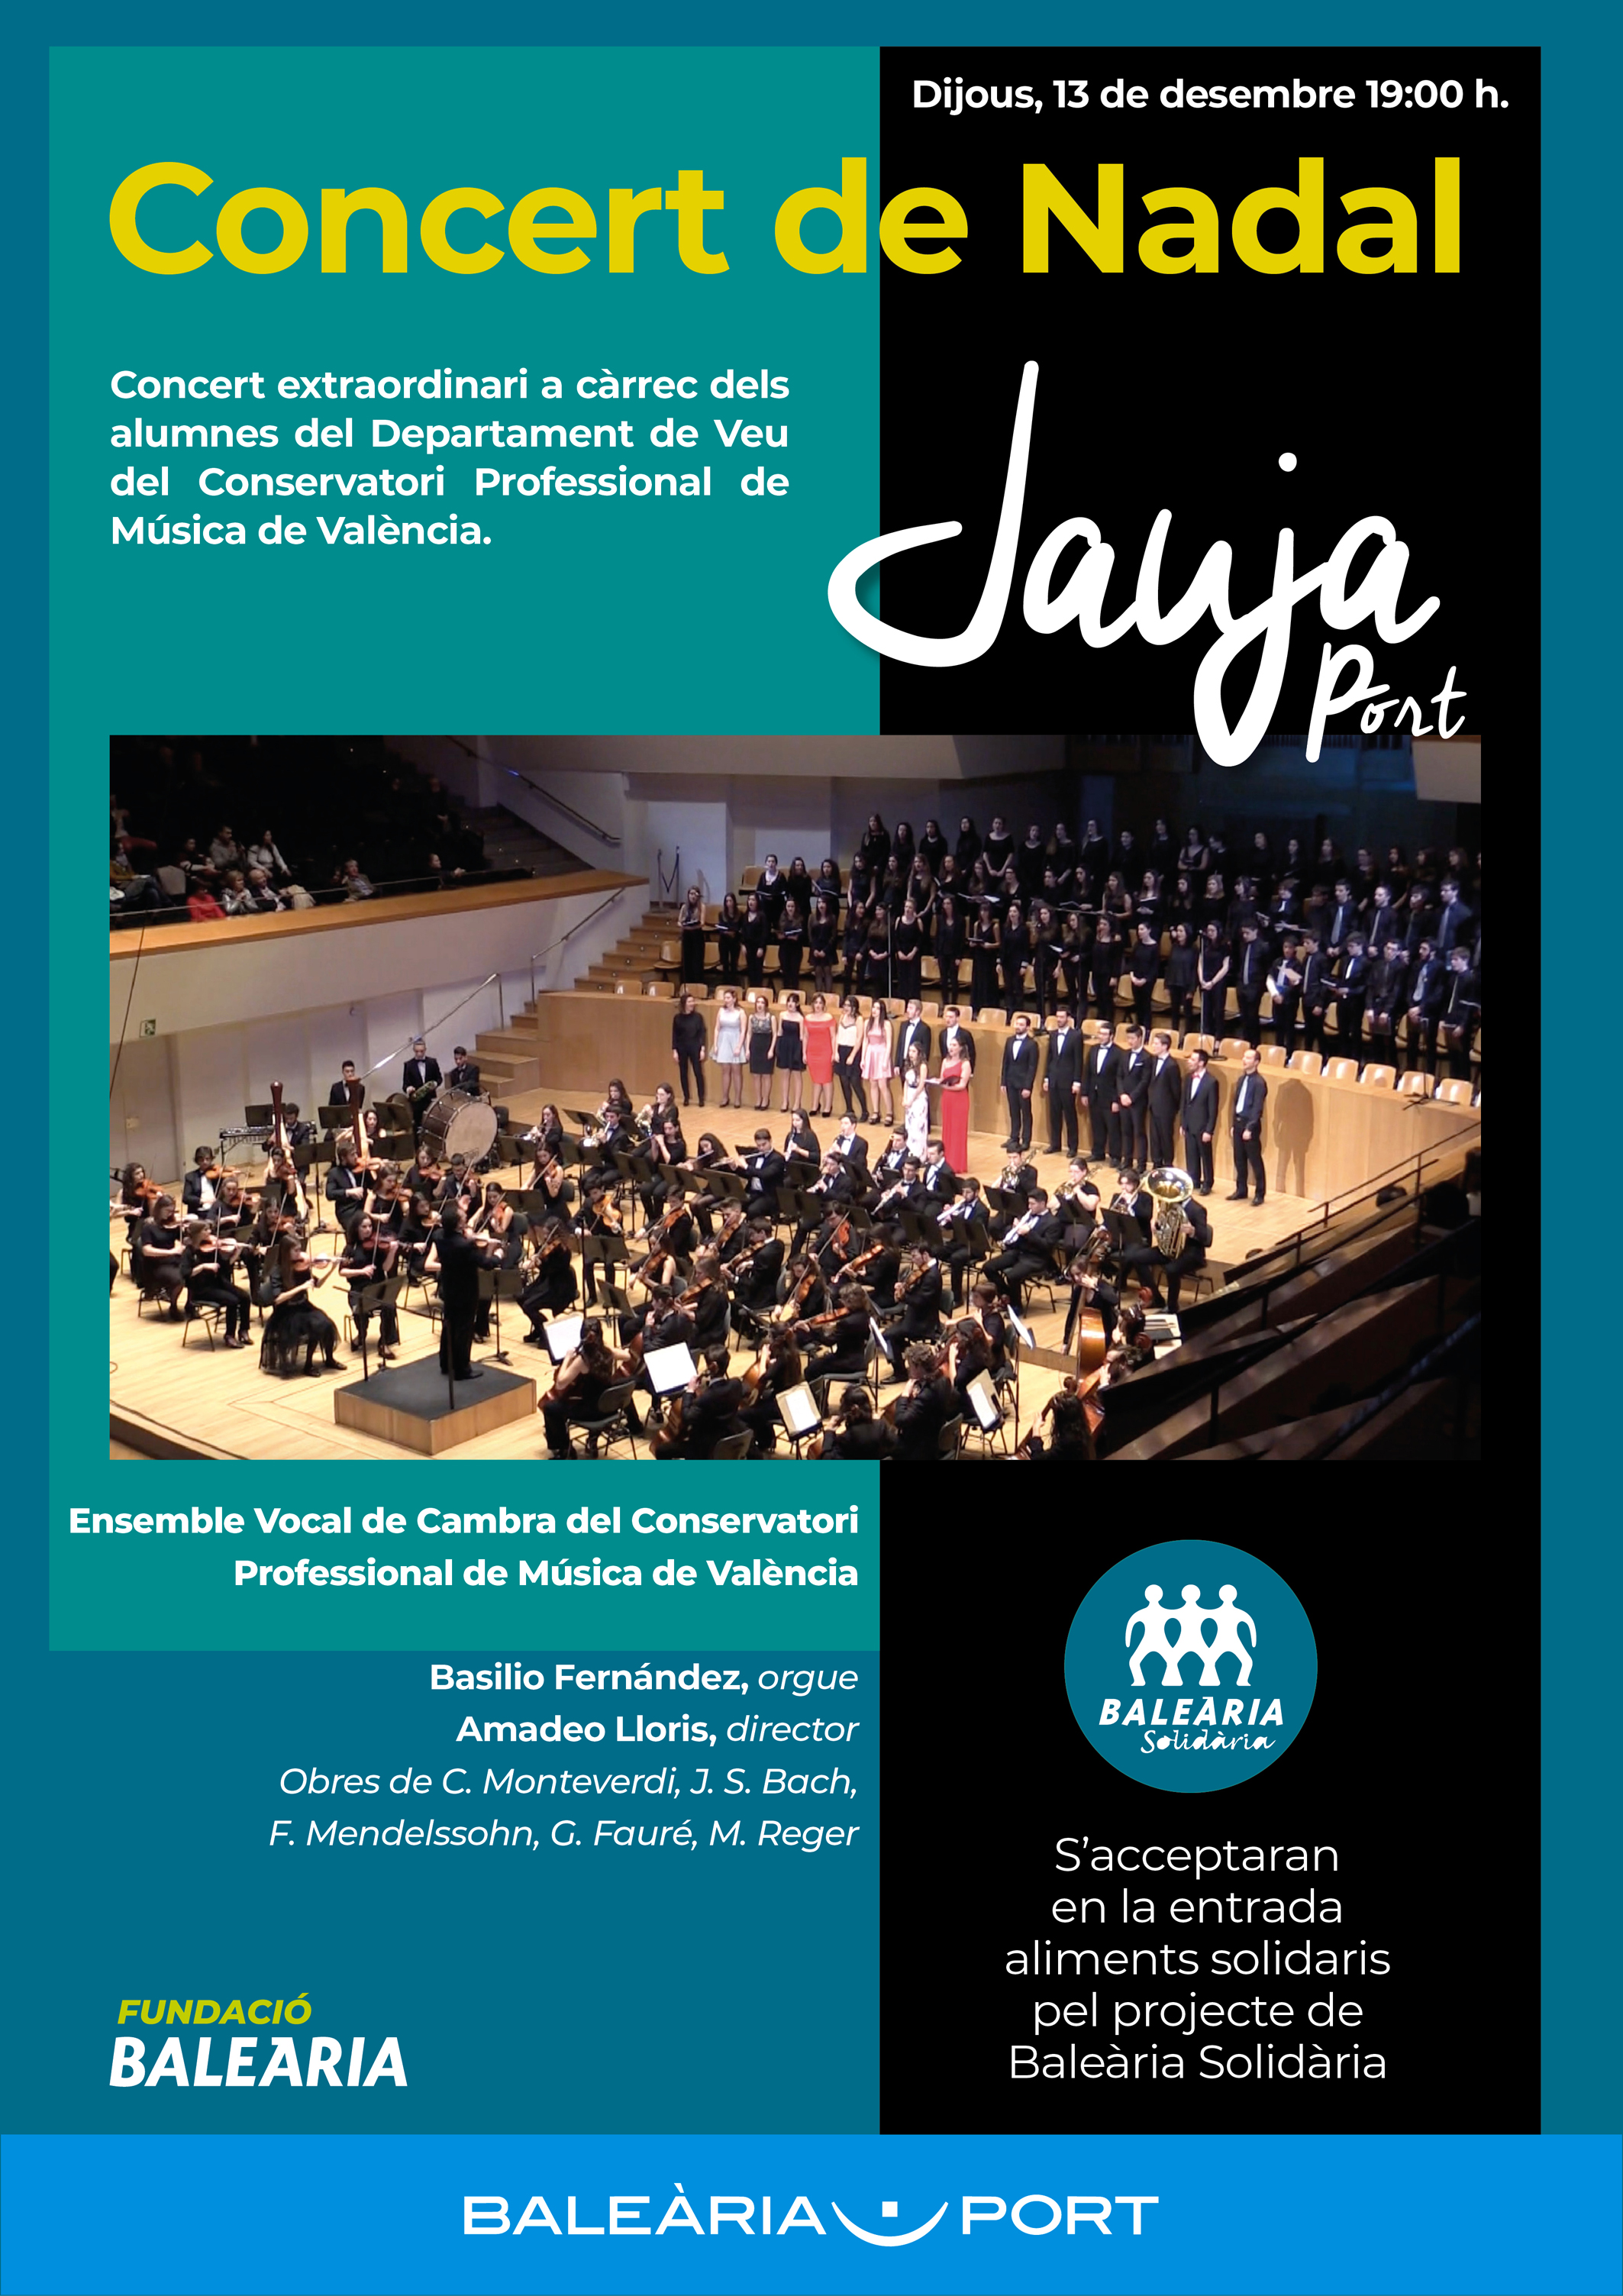 Concierto de Navidad a cargo del Conservatori Professional de Música de València